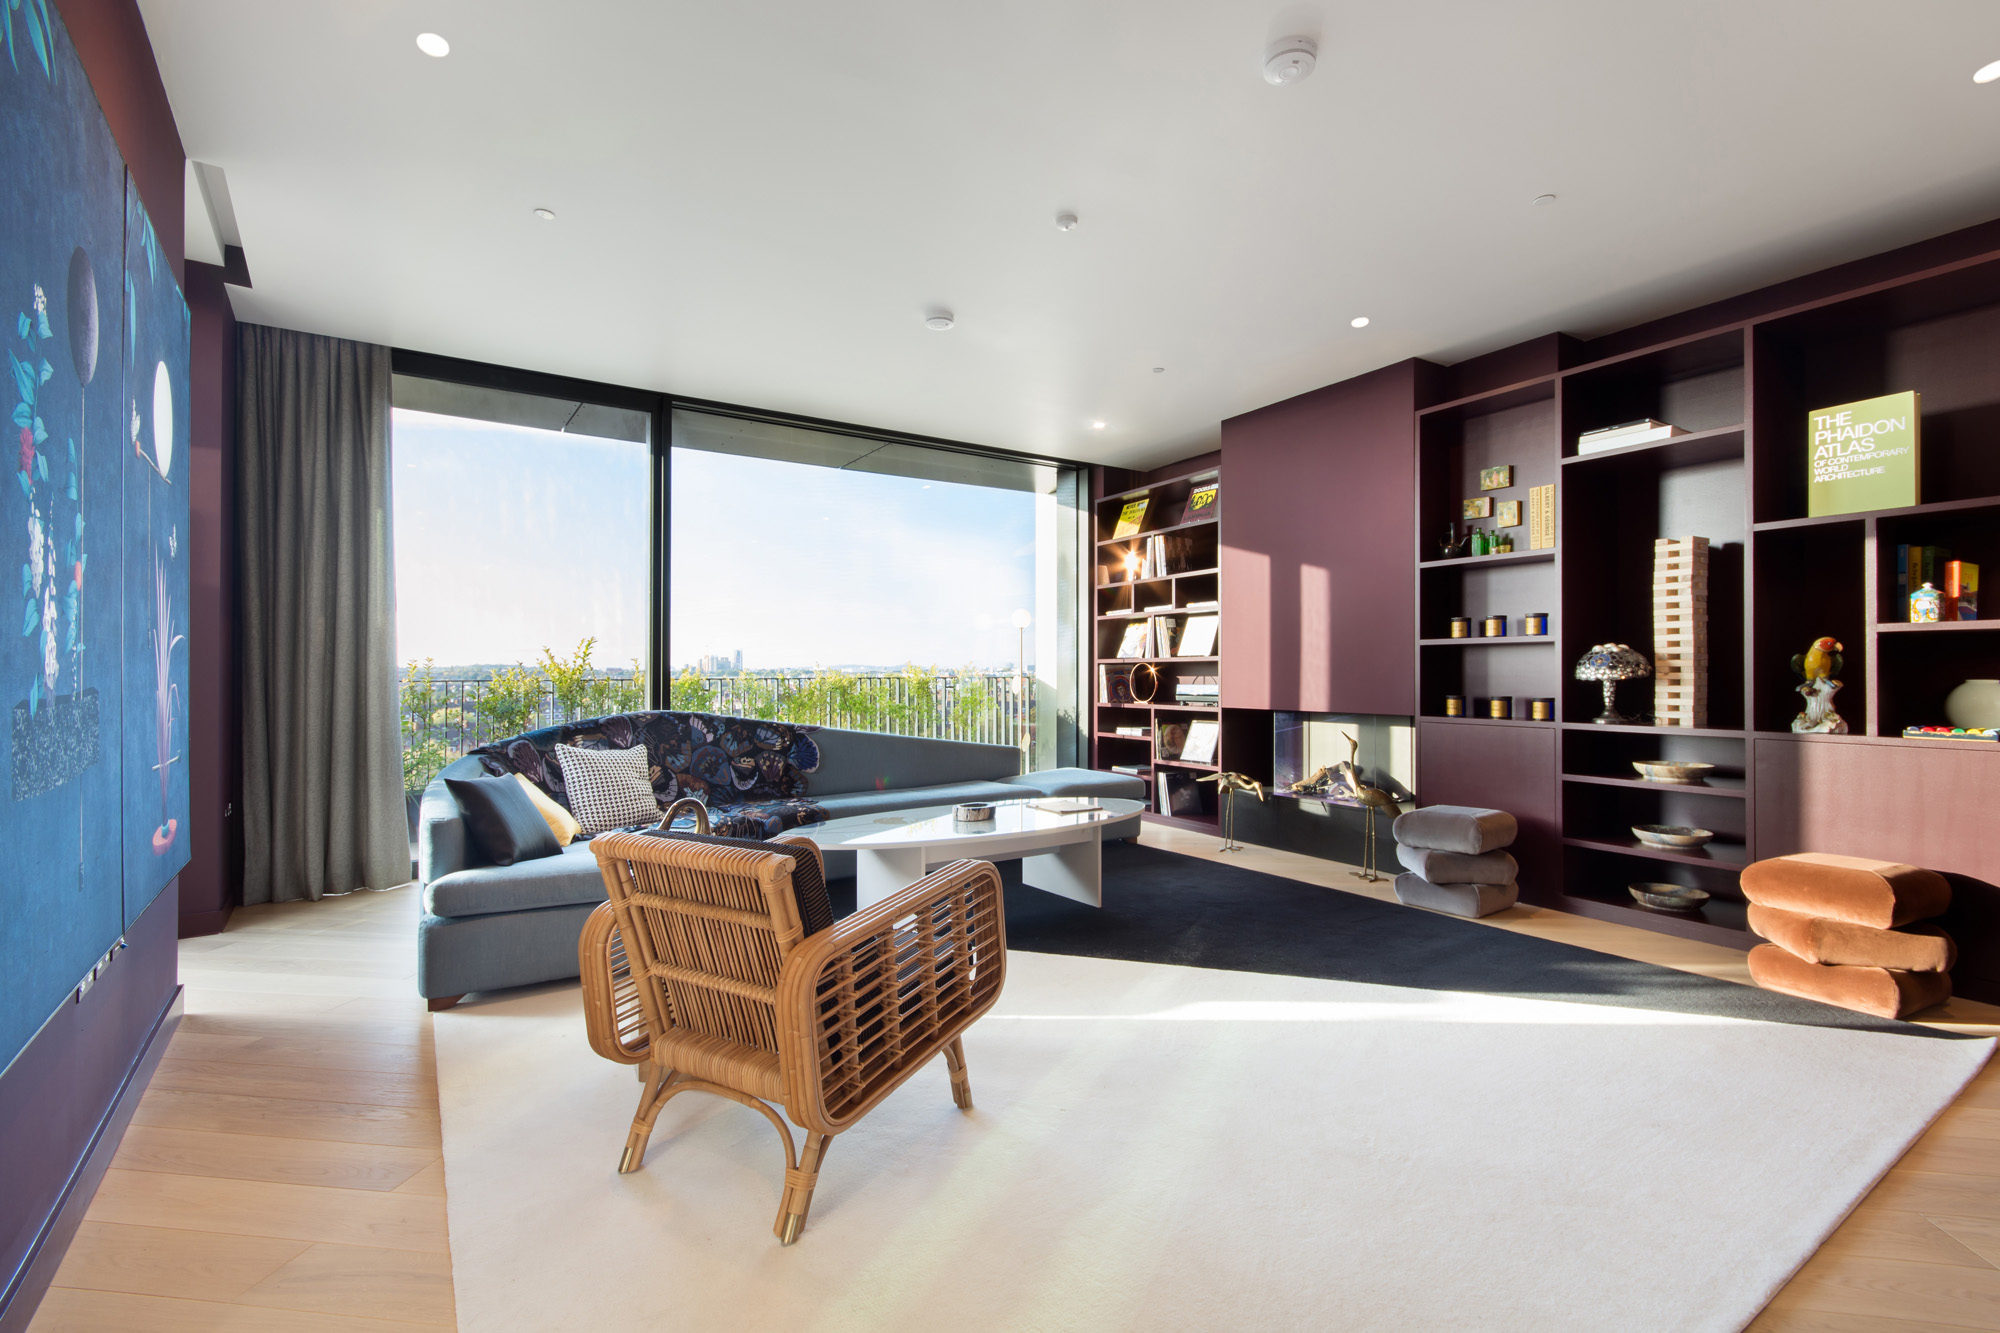 For Sale: BBC Television Centre luxury penthouse apartment in Shepherd's Bush W12